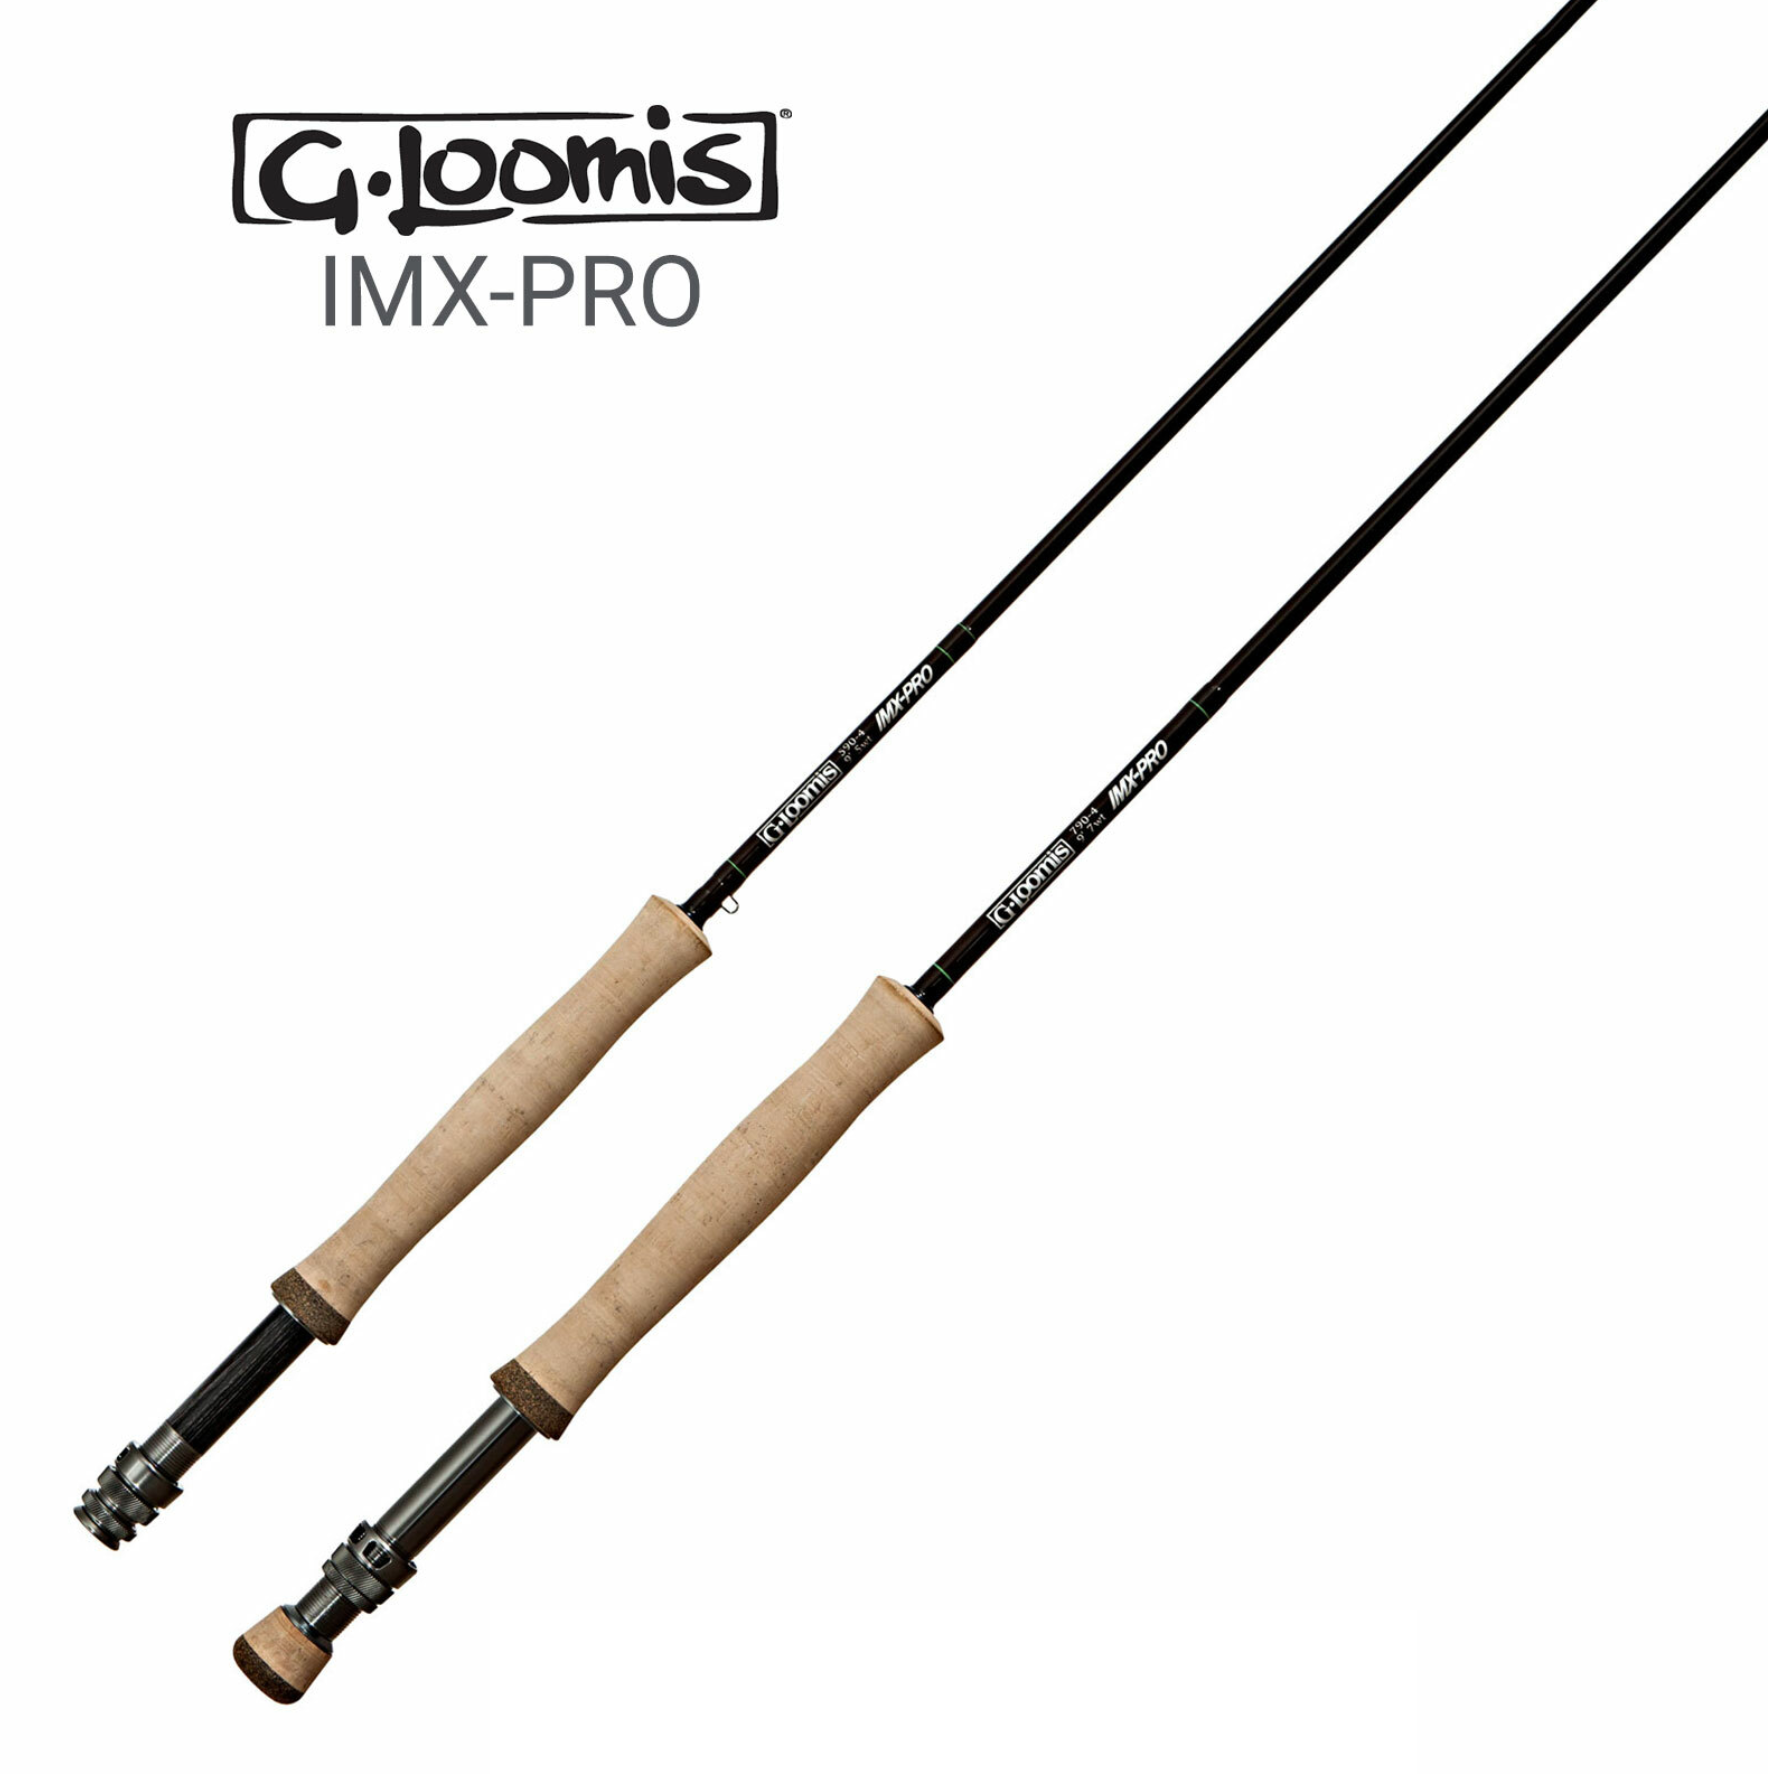 G Loomis IMX-PRO Fly Rod